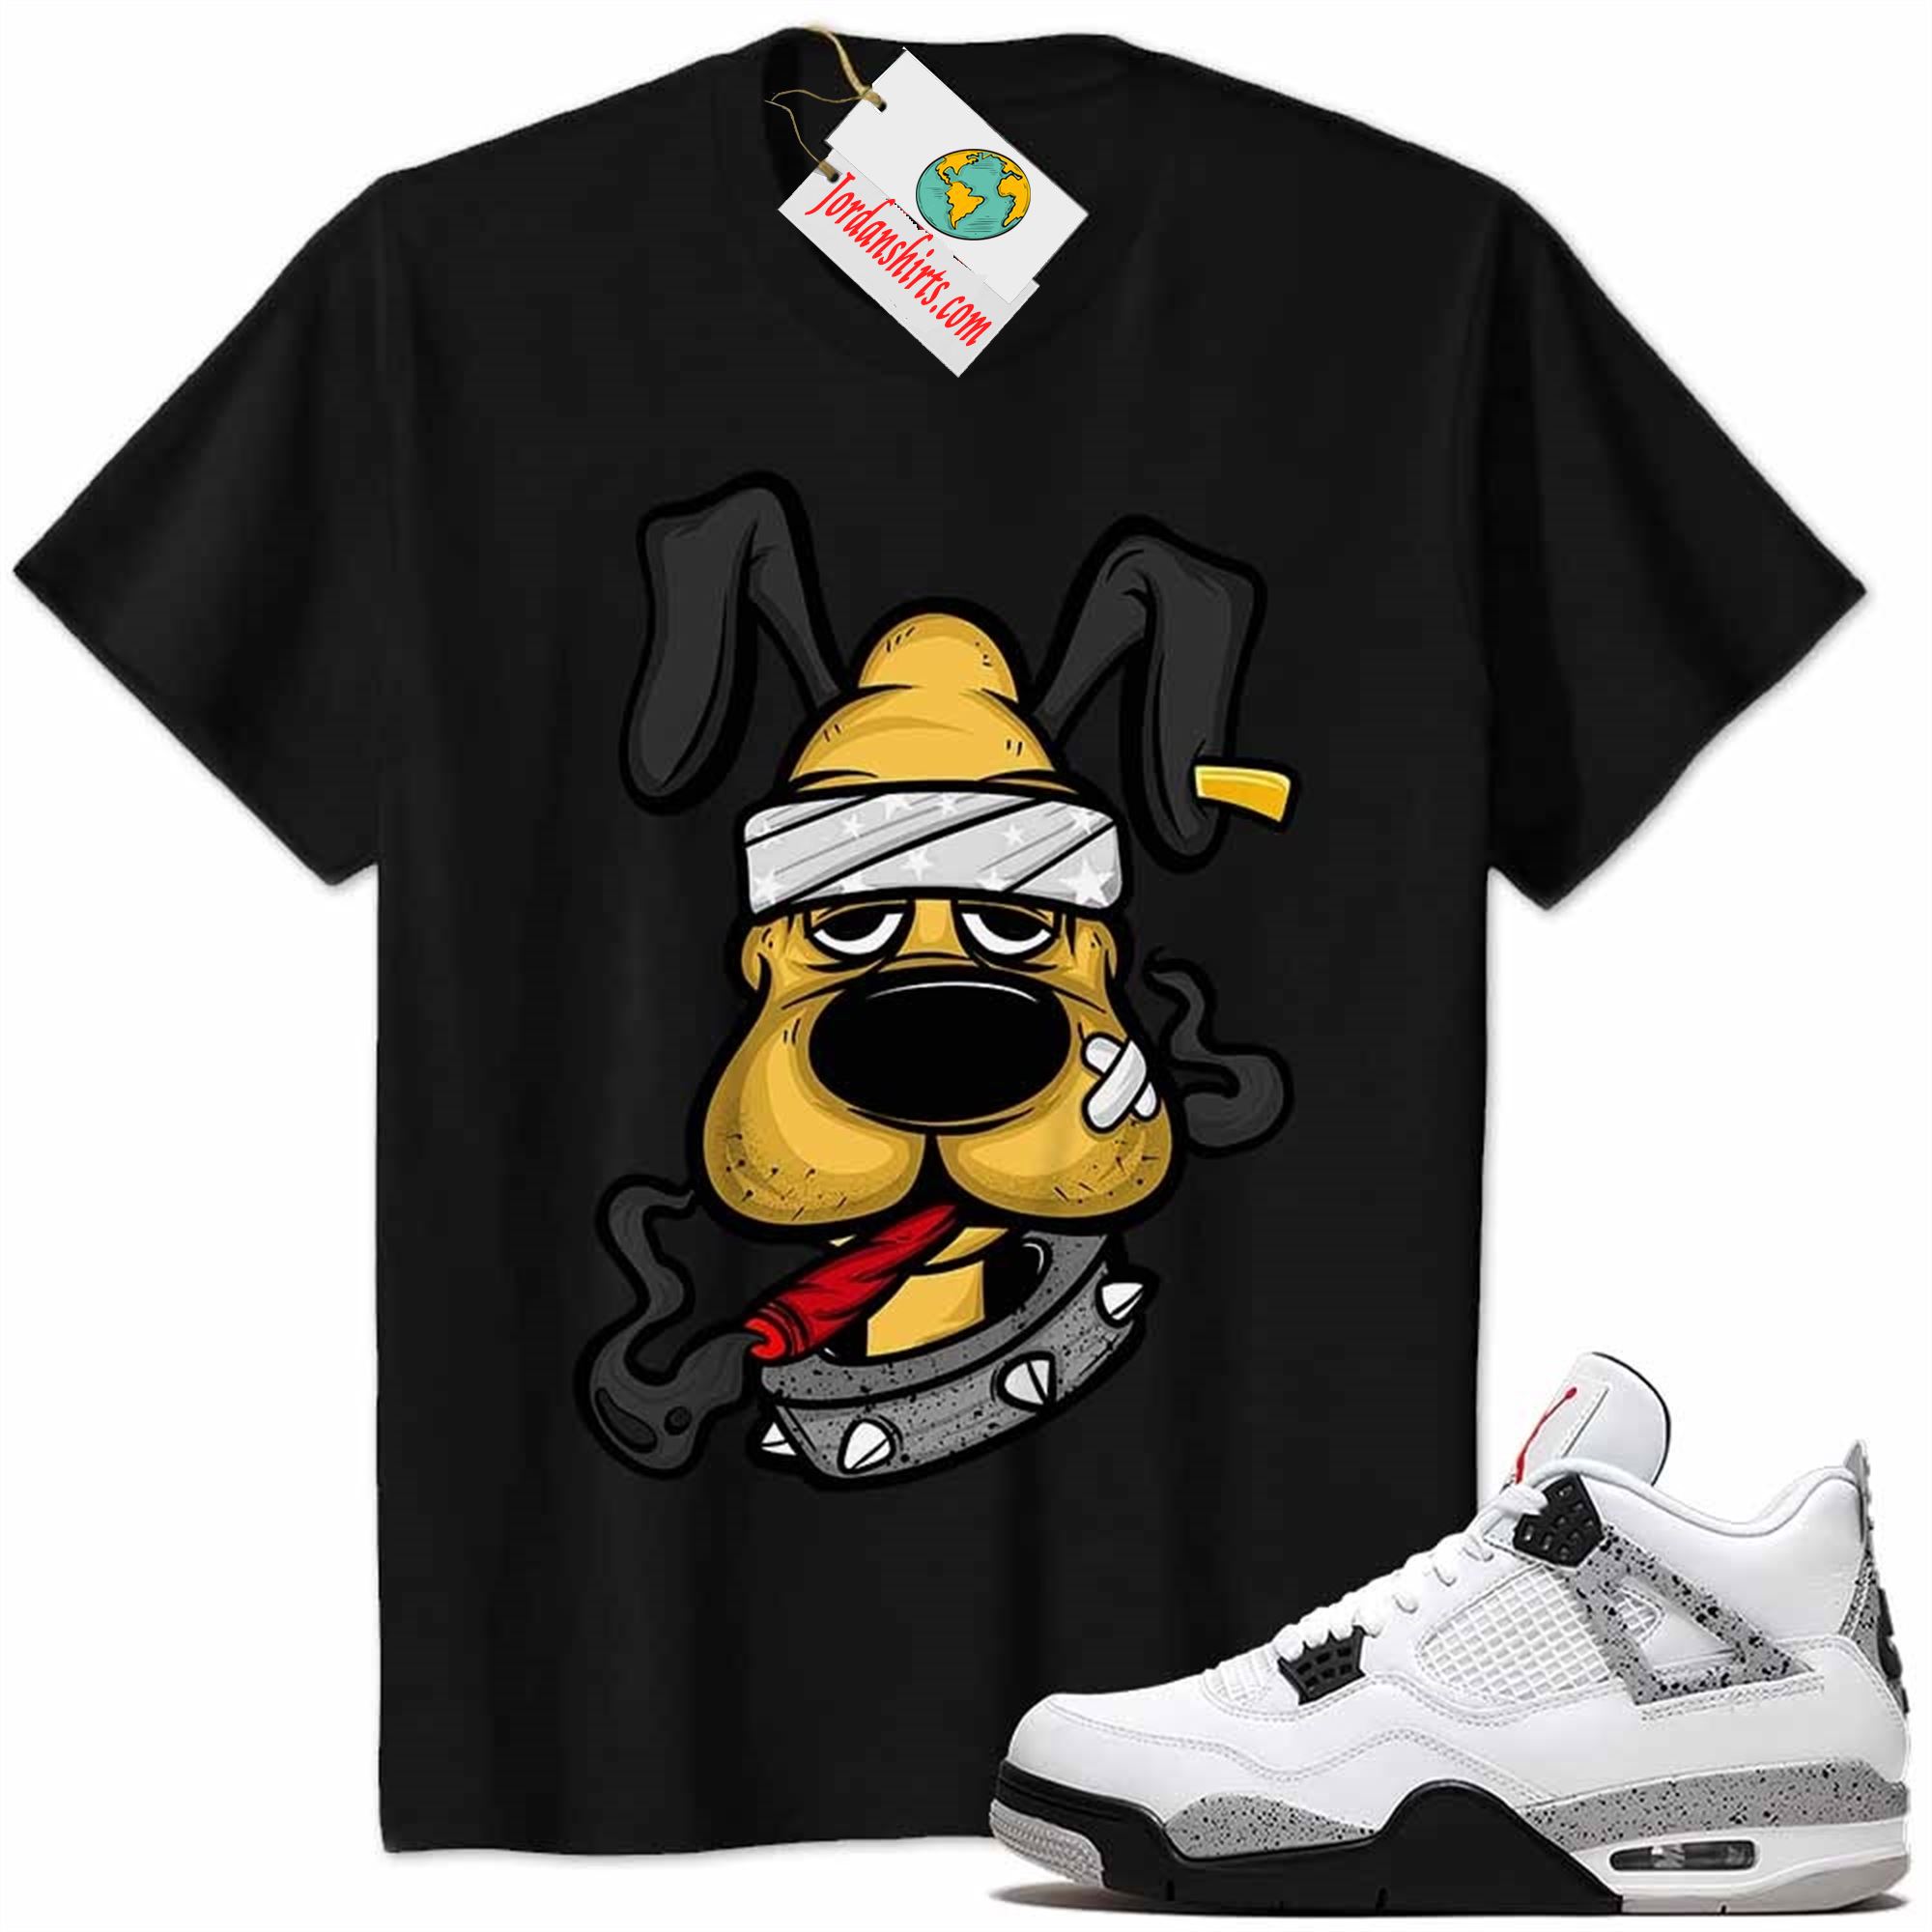 Jordan 4 Shirt, Gangster Pluto Smoke Weed Black Air Jordan 4 Cement 4s Full Size Up To 5xl